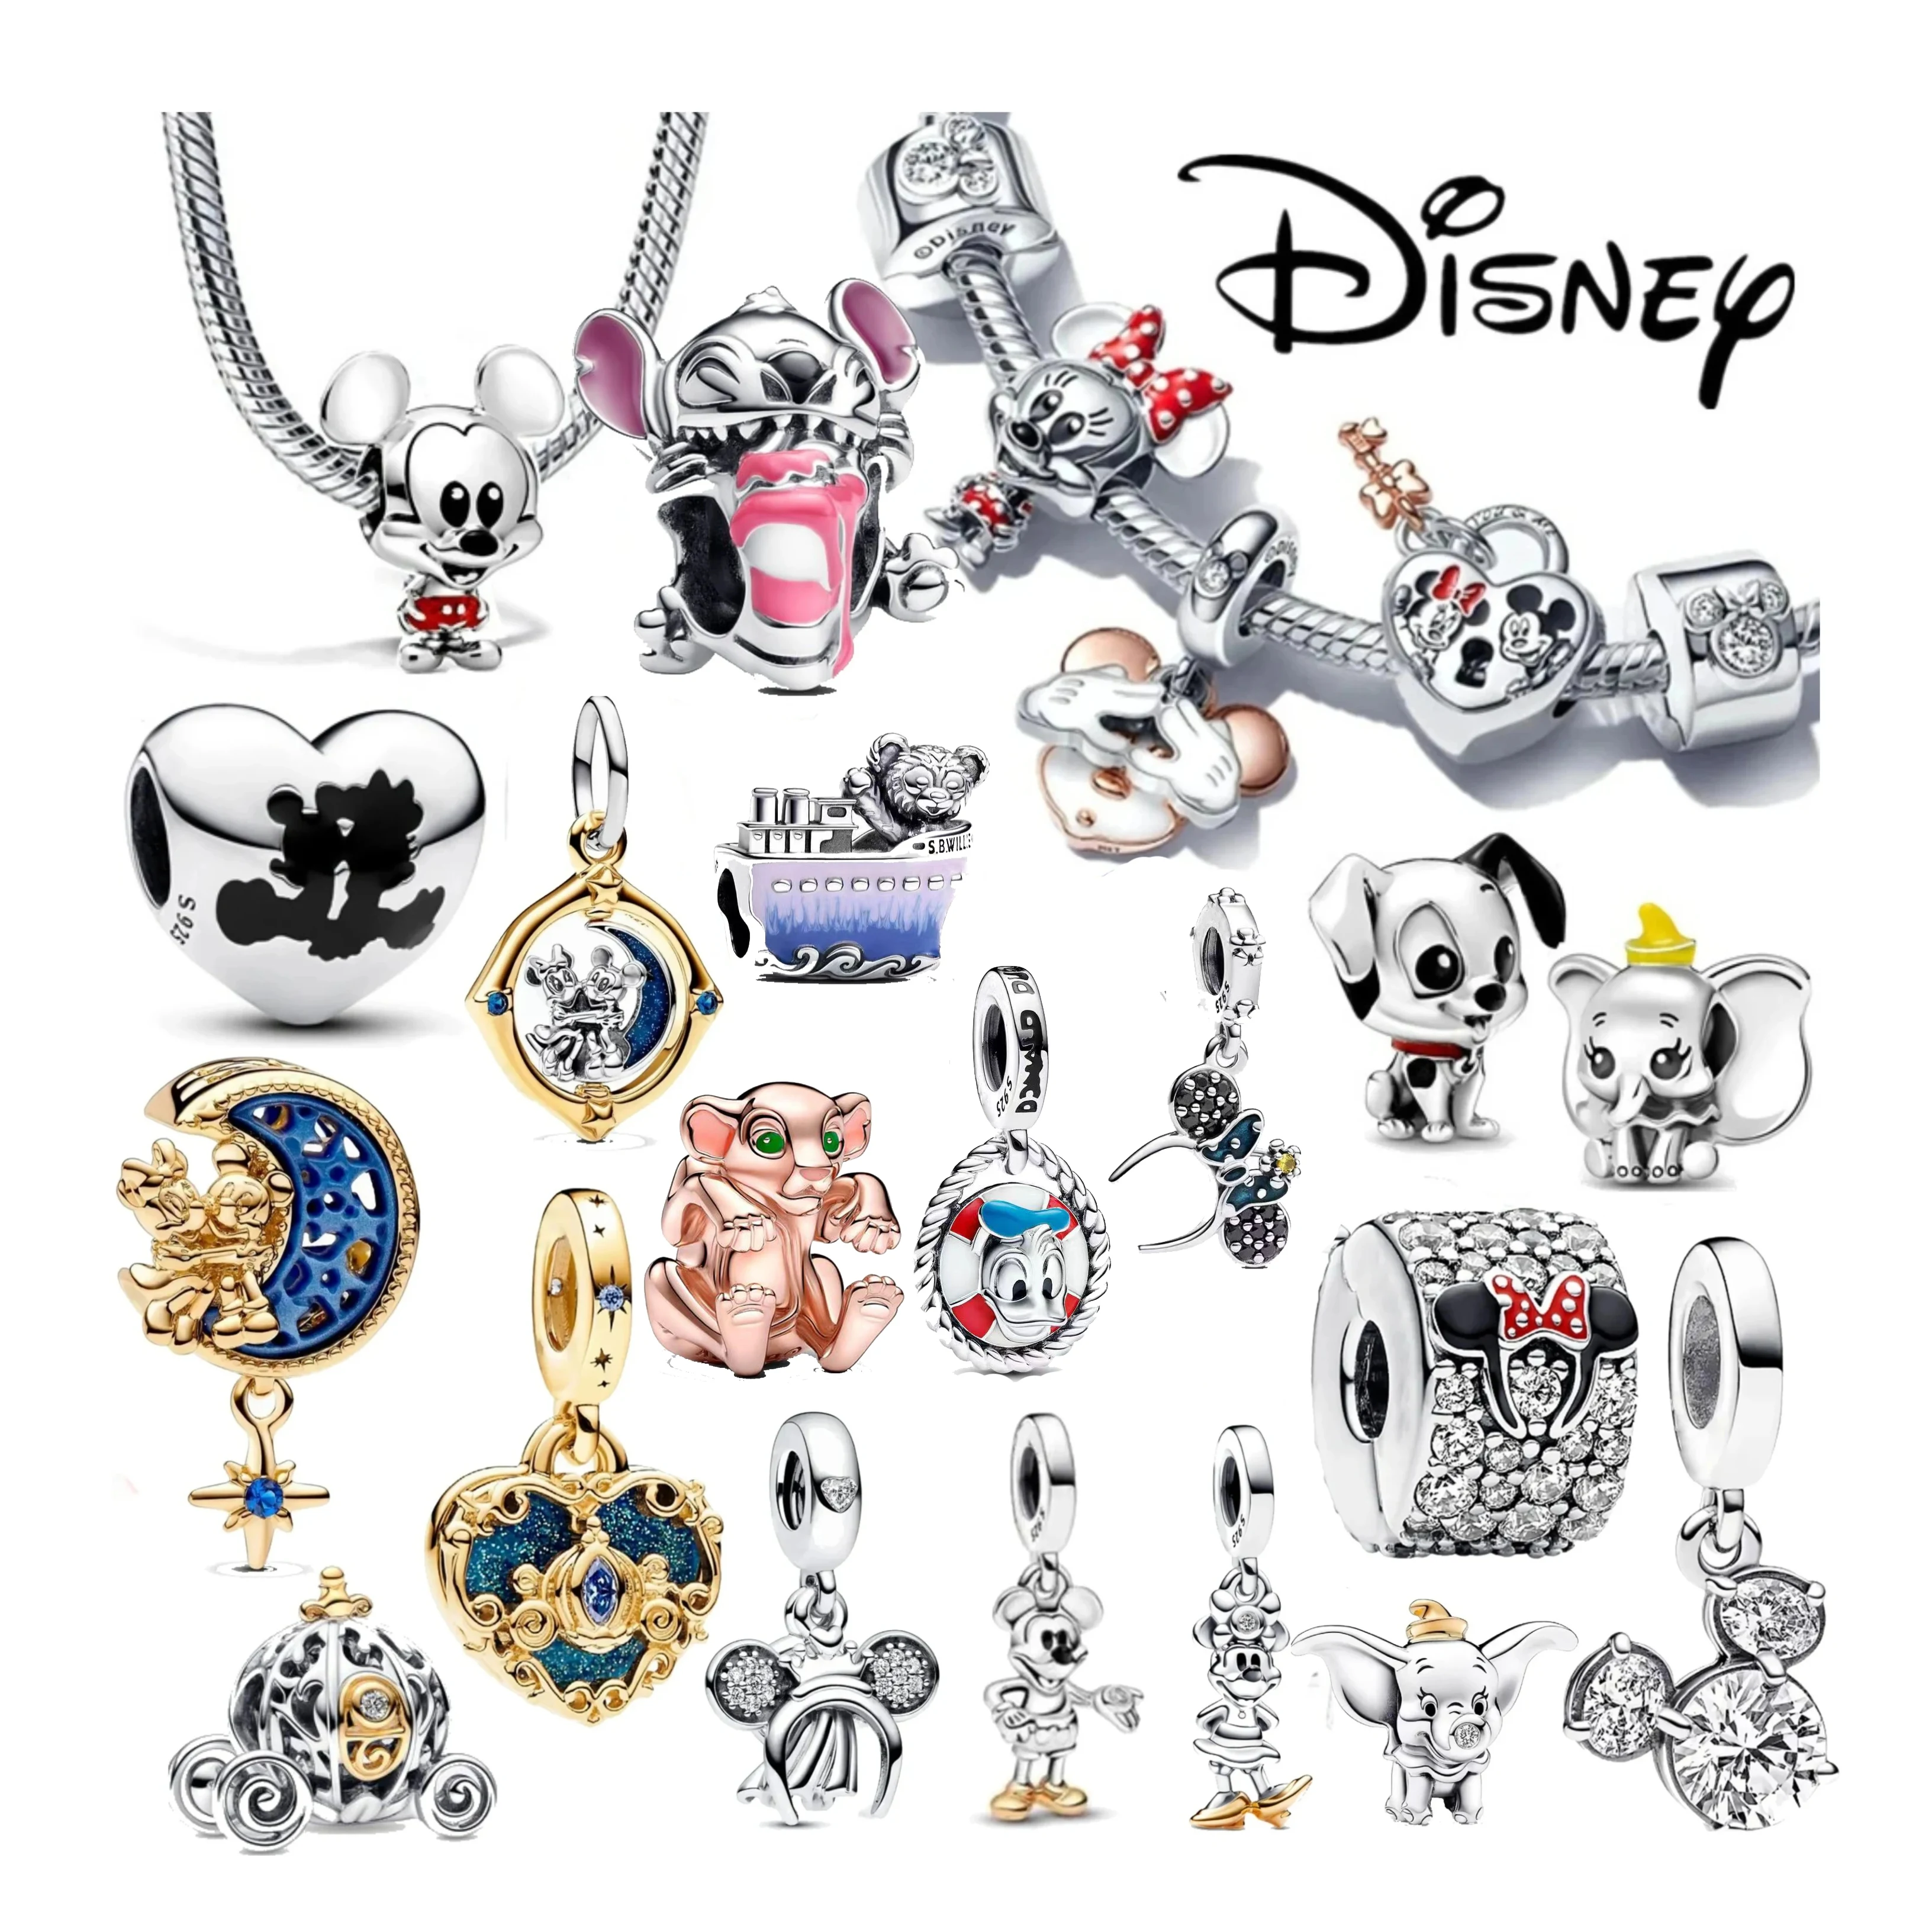 

925Sterling Silver Jewelry HEROCROSS Disney Cinderella Mickey Minnie Stitch Charm Bead Fit Pandora Bracelet Valentine's Day Gift